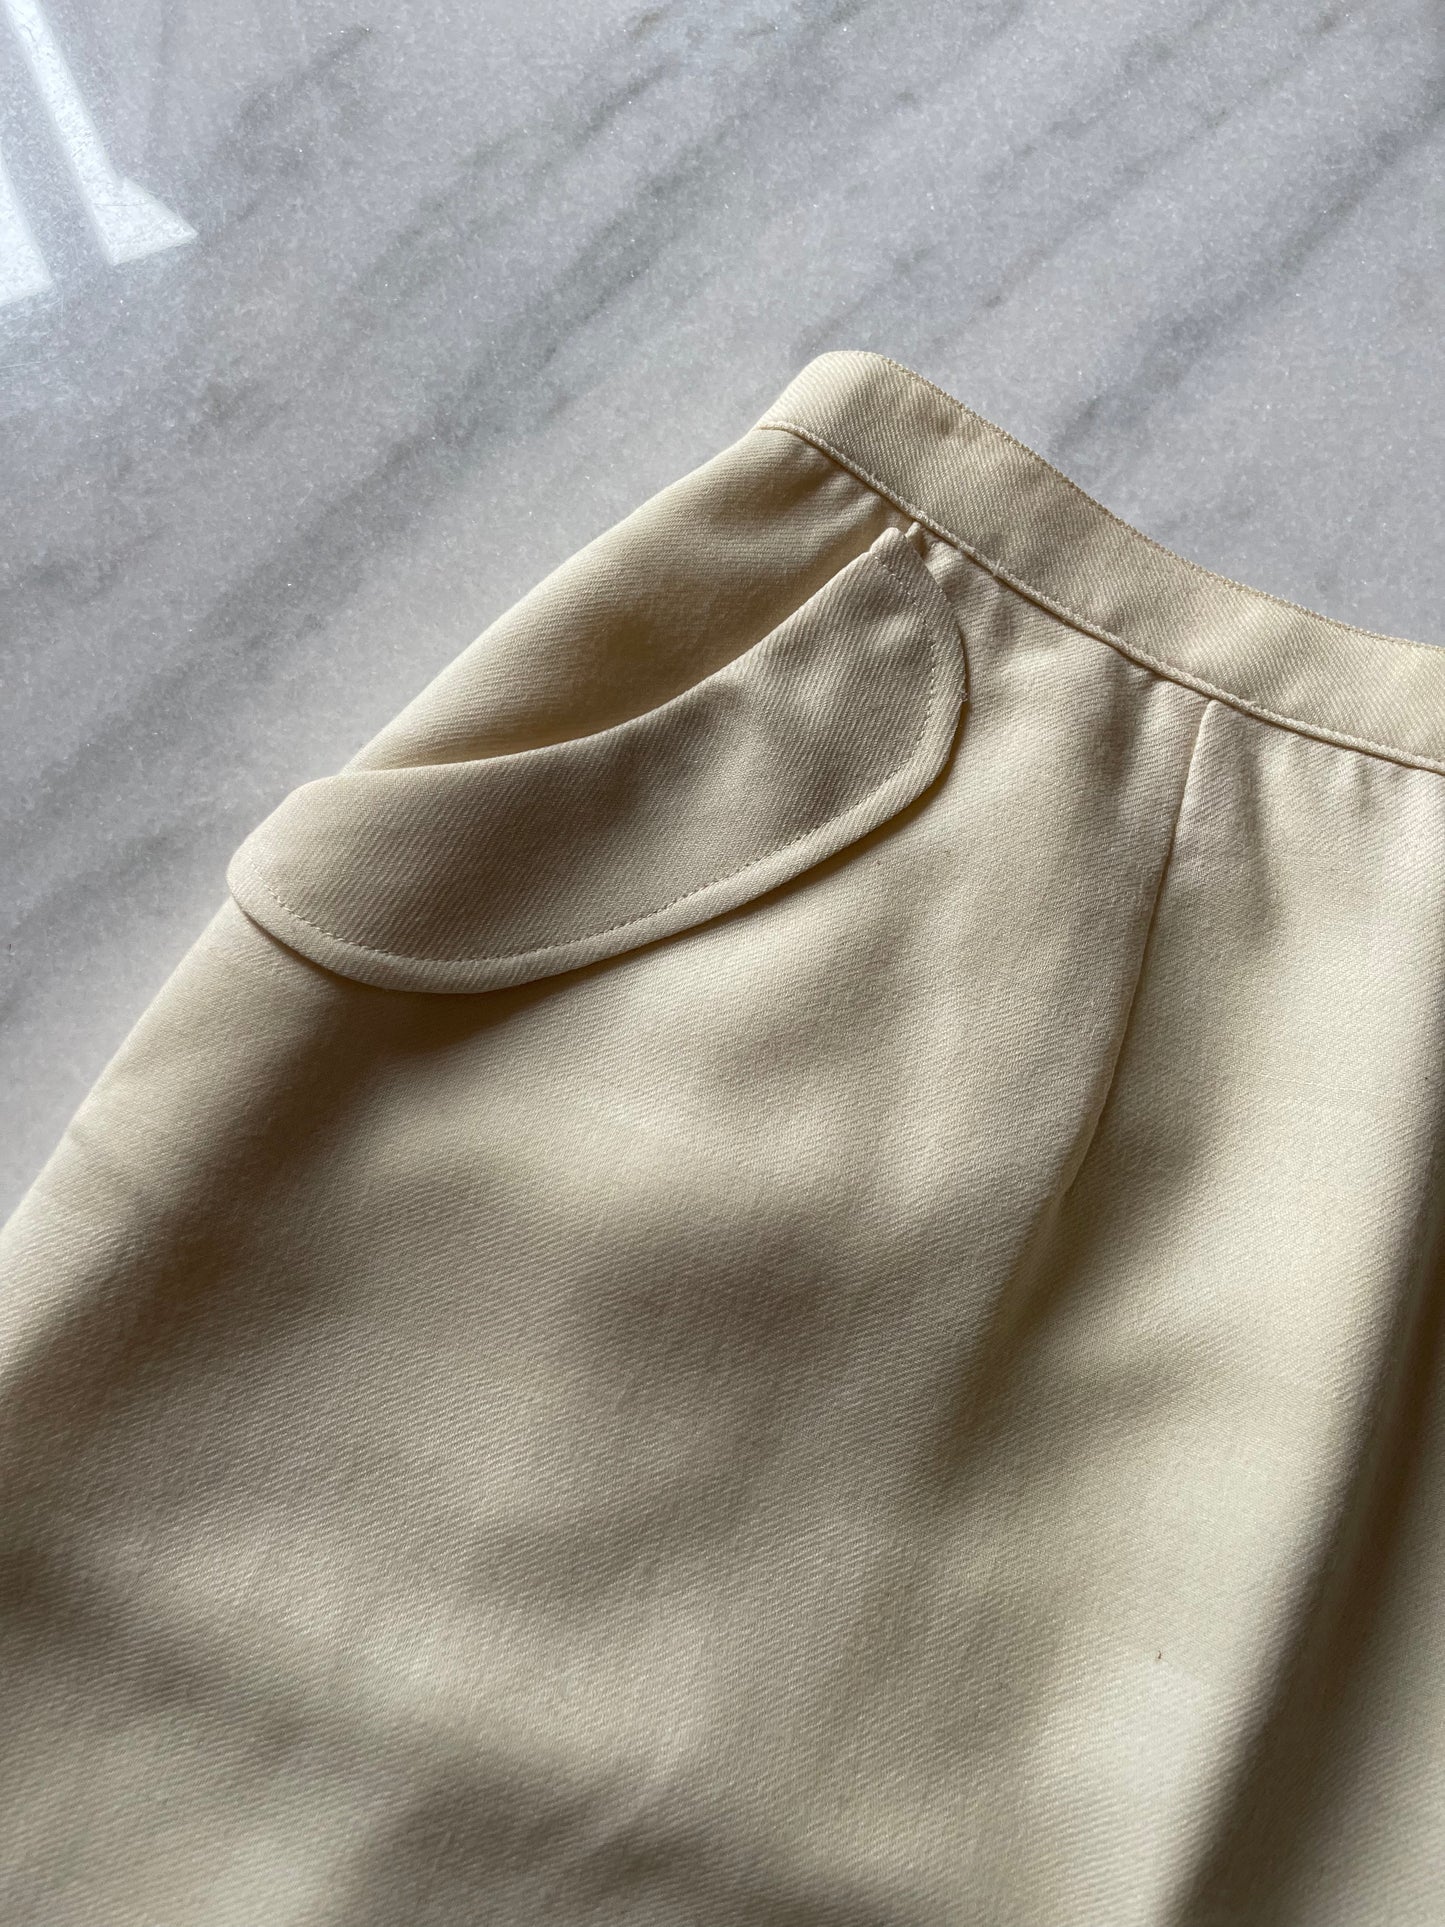 Panna skirt